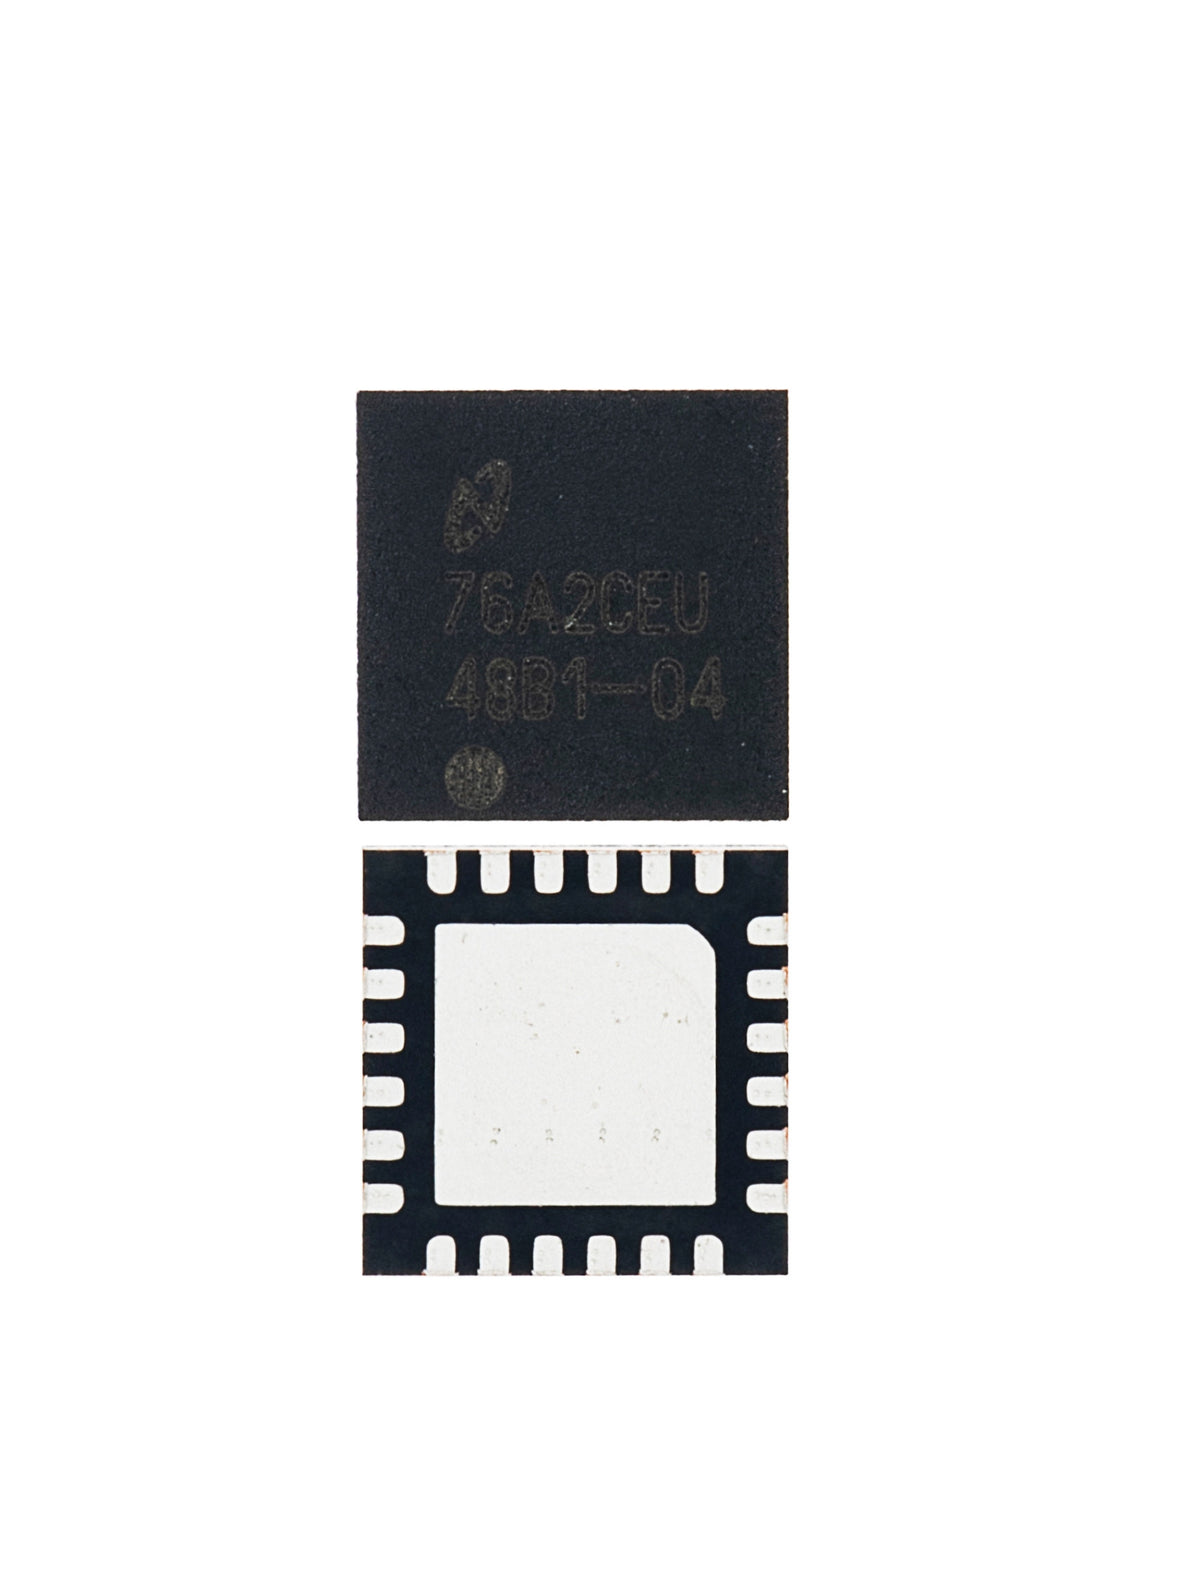 LCD BACKLIGHT DRIVER IC COMPATIBLE WITH MACBOOK RETINA 13" / 15" A1502 / A1398 (LATE 2013 / MID 2014 / EARLY 2015 / MID 2015) (LP8548BISQ-03 / 48B1-03 / LP8548B1SQ-04: 353S4159 / U7700 / U7701: QFN-24 PIN)